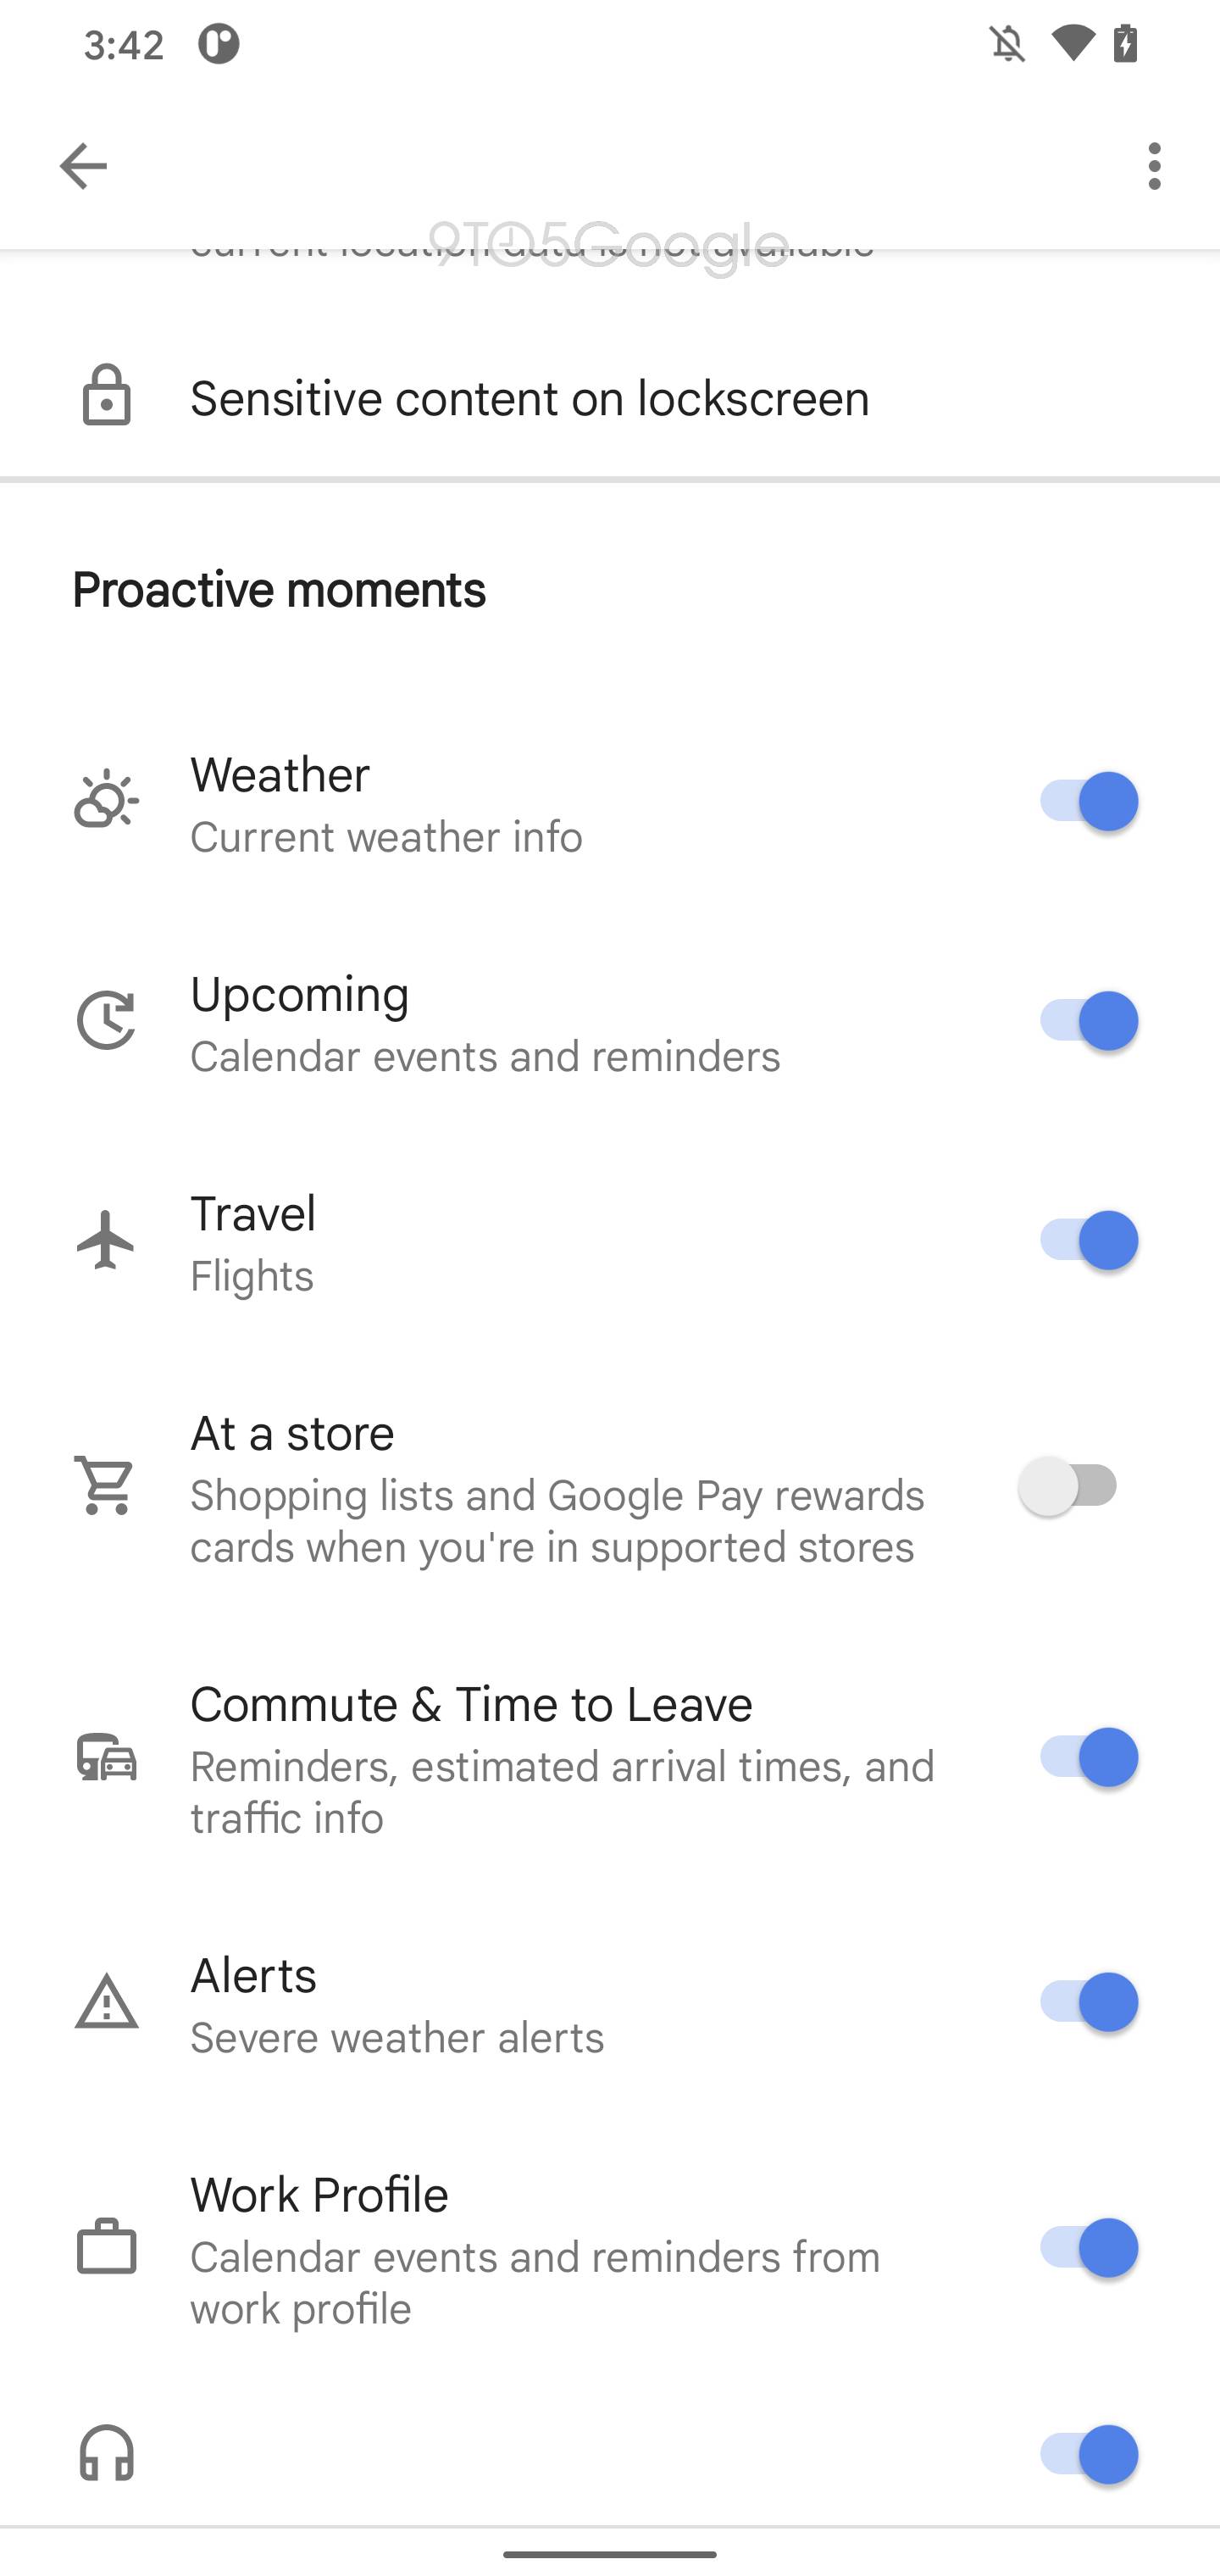 Google Assistant Live Space